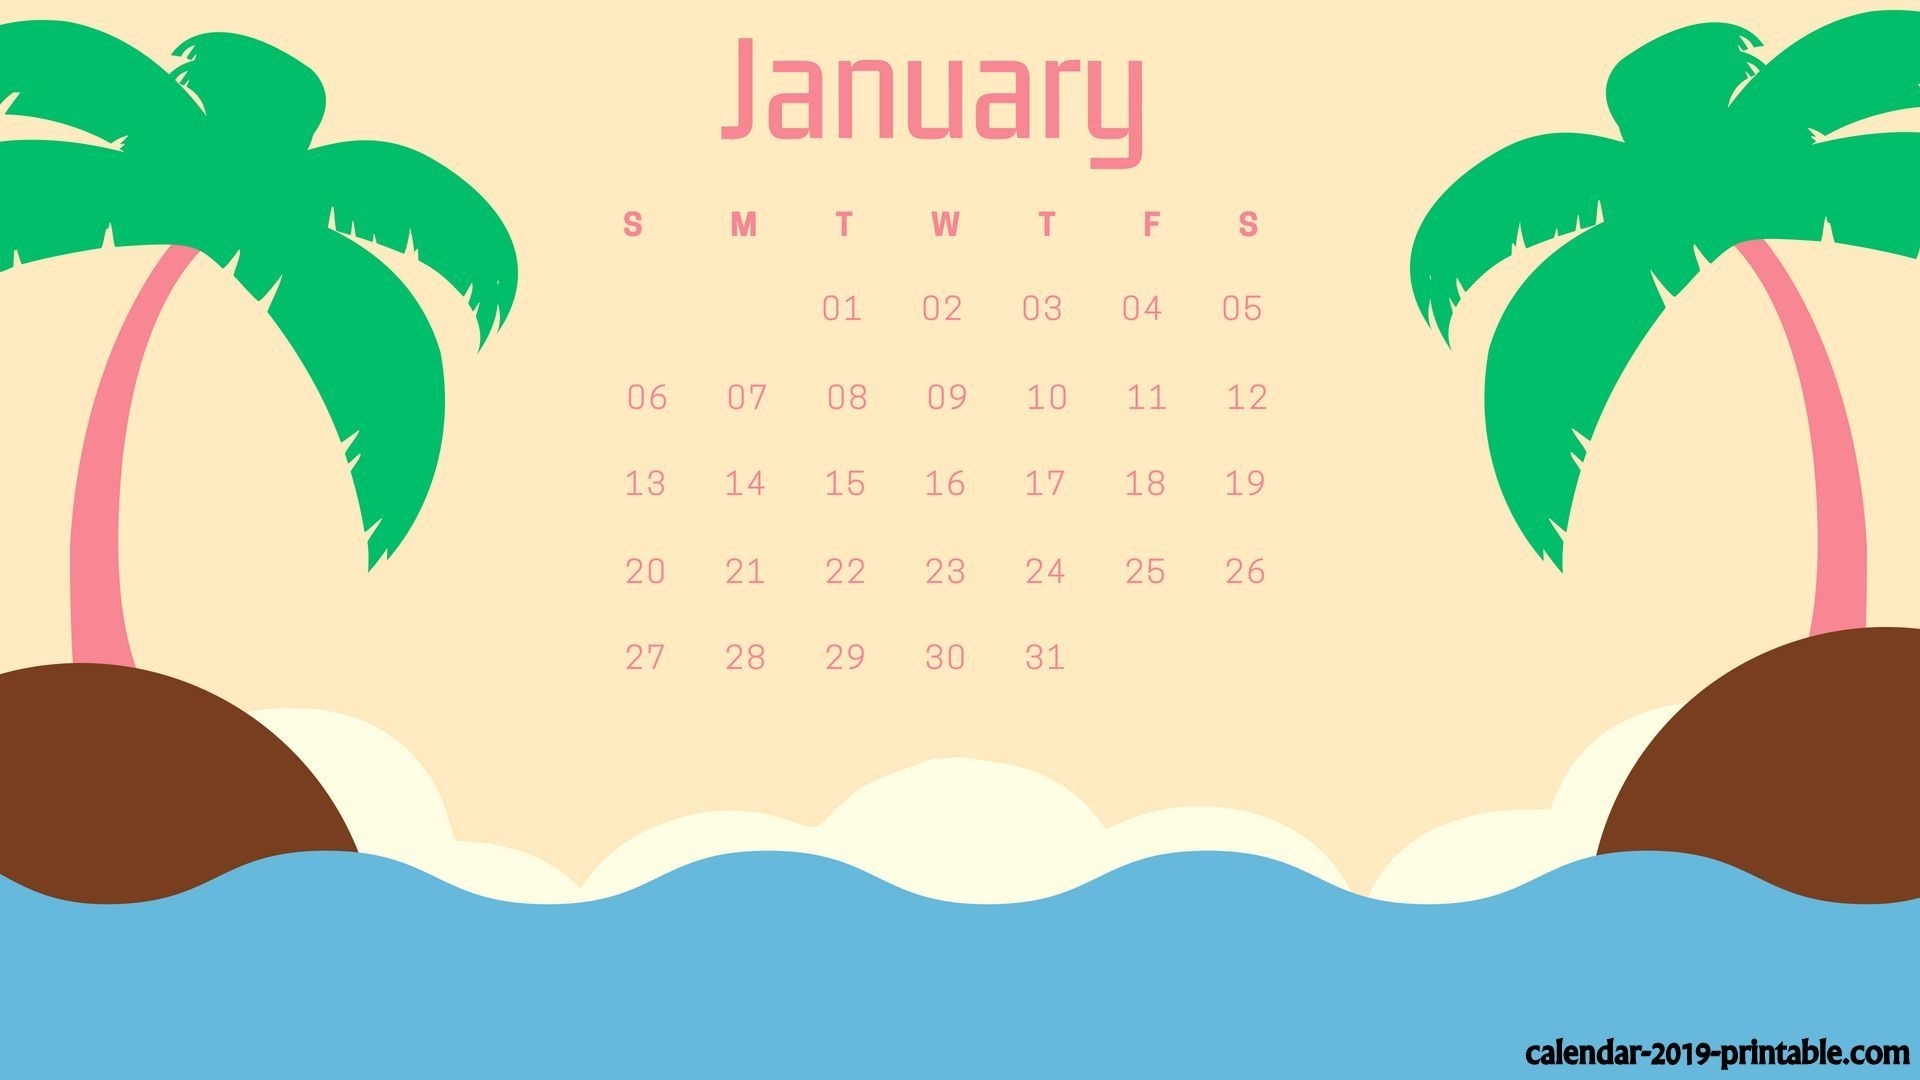 January 2019 Calendar Wallpaper | Calendar 2019 Wallpapers In 2019 in Calendars For January Background Designs